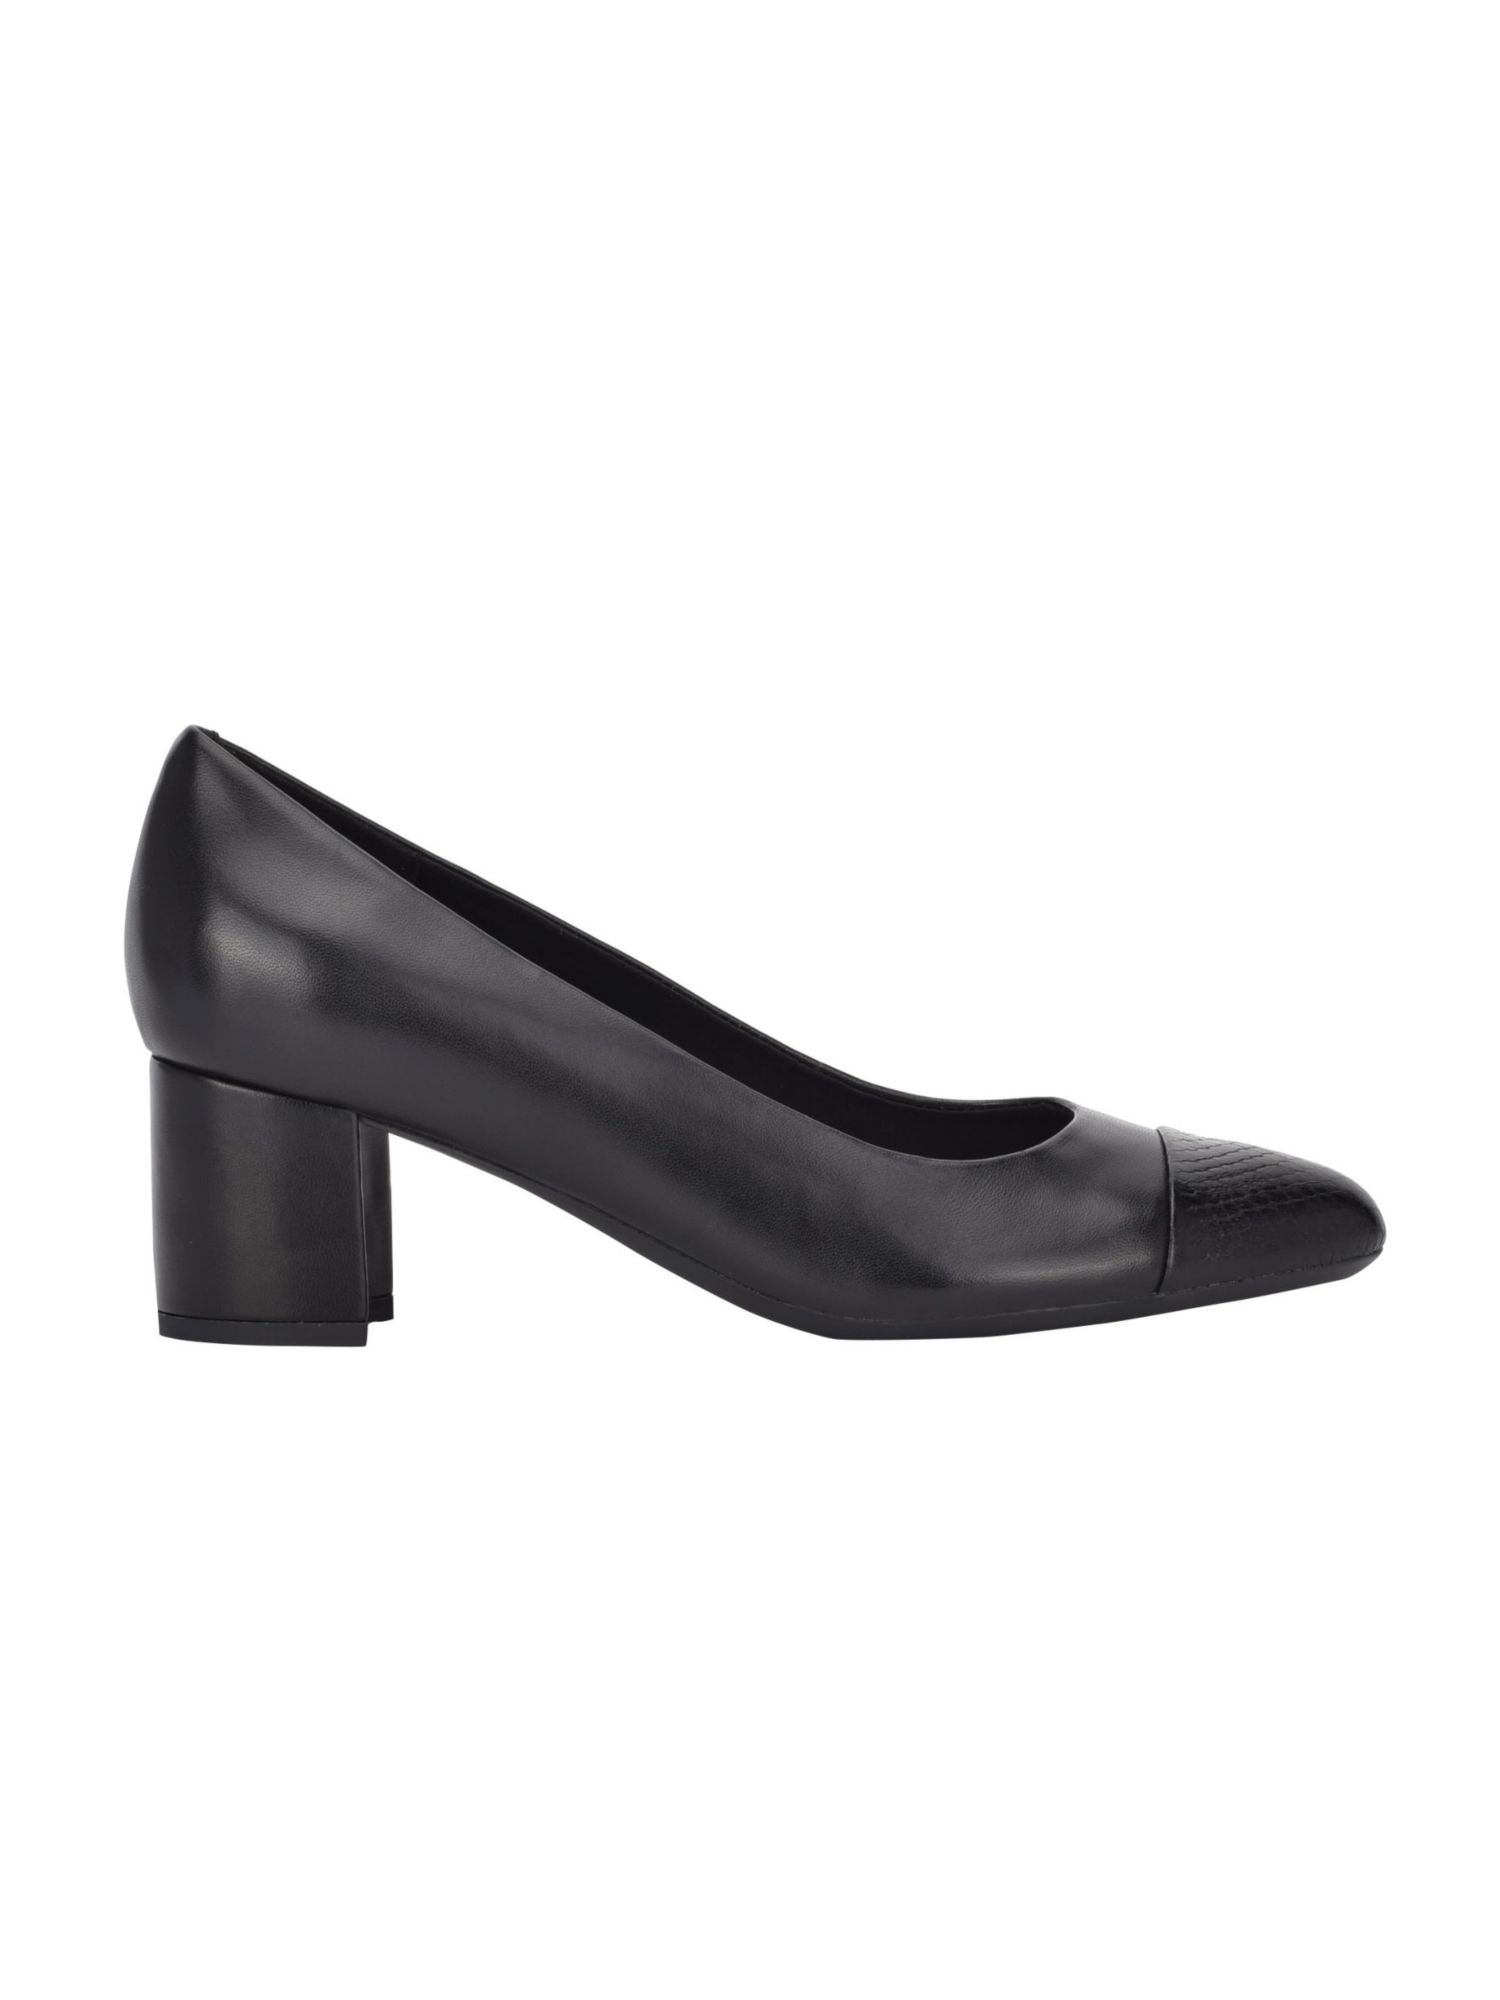 EVOLVE Womens Black Snakeskin Toe Cap Cushioned Comfort Rainie Almond Toe Block Heel Slip On Leather Pumps Shoes 8.5 M